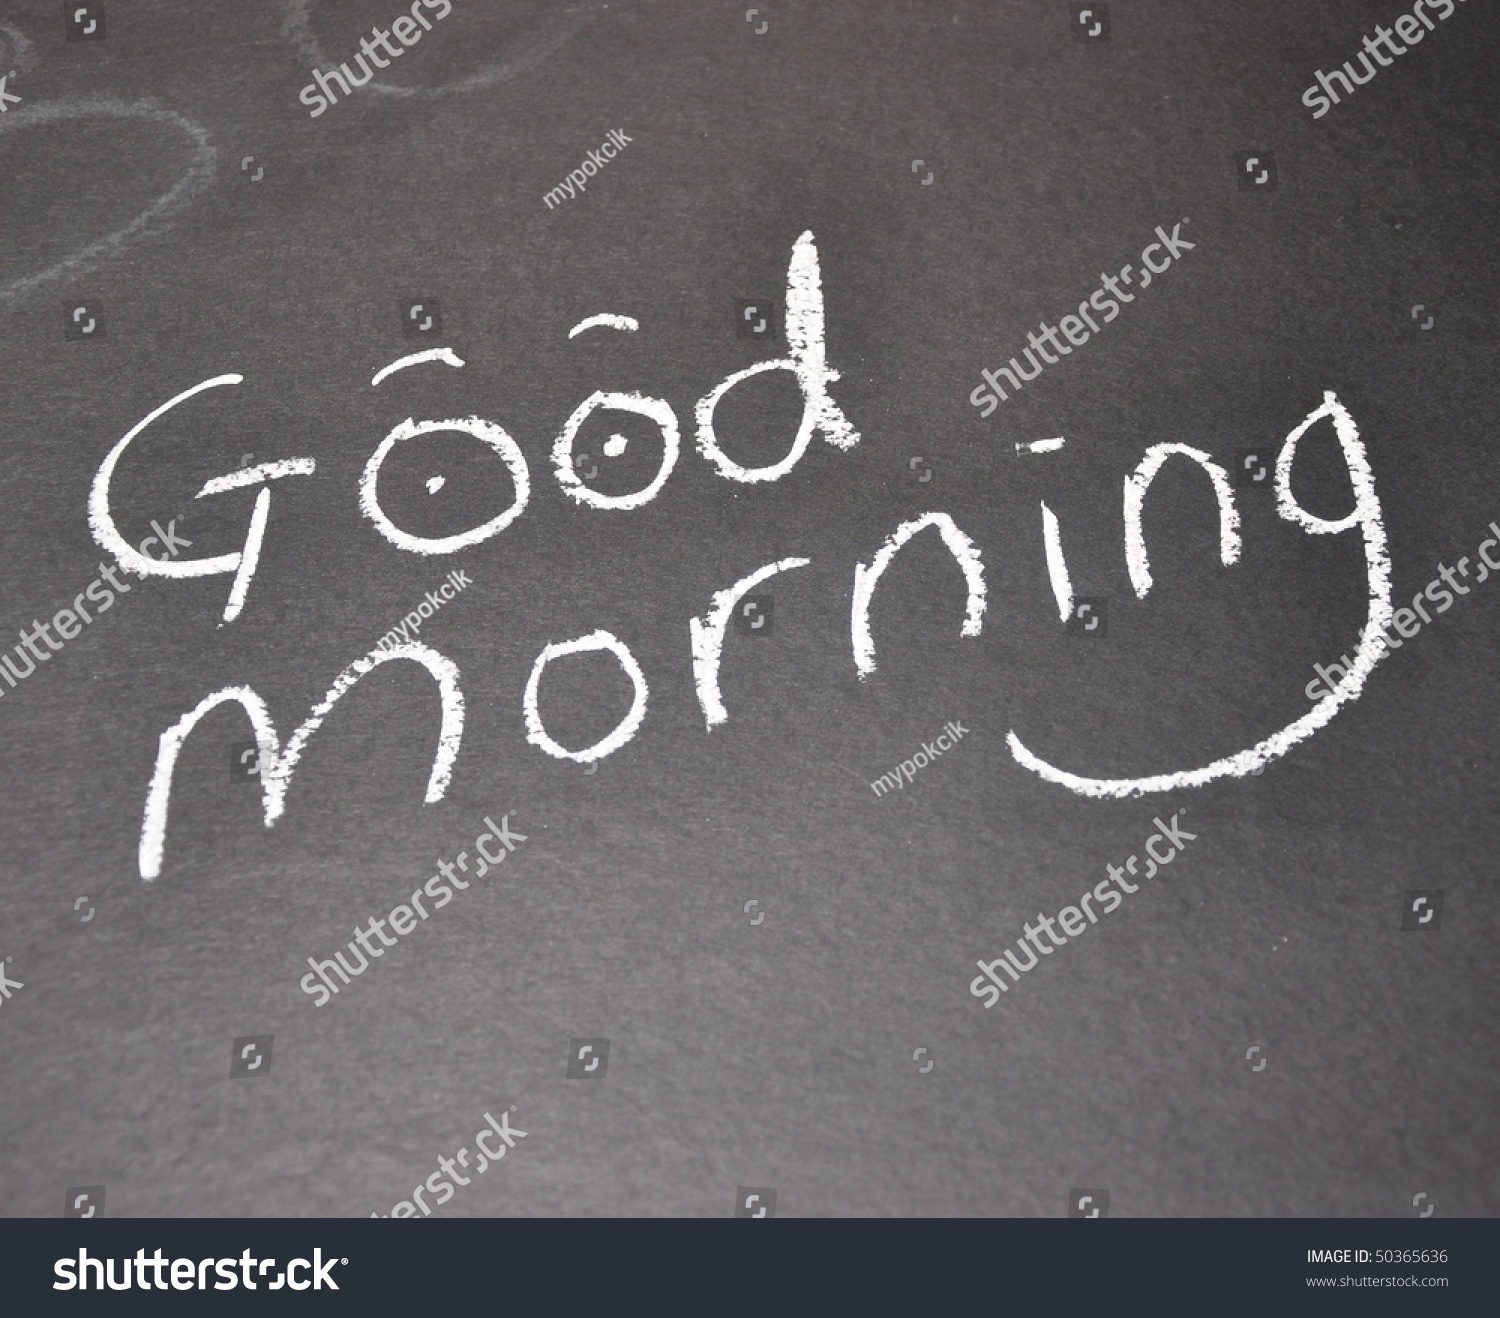 Good Morning Massage On Chalkboard Stock Photo 50365636 - Shutterstock